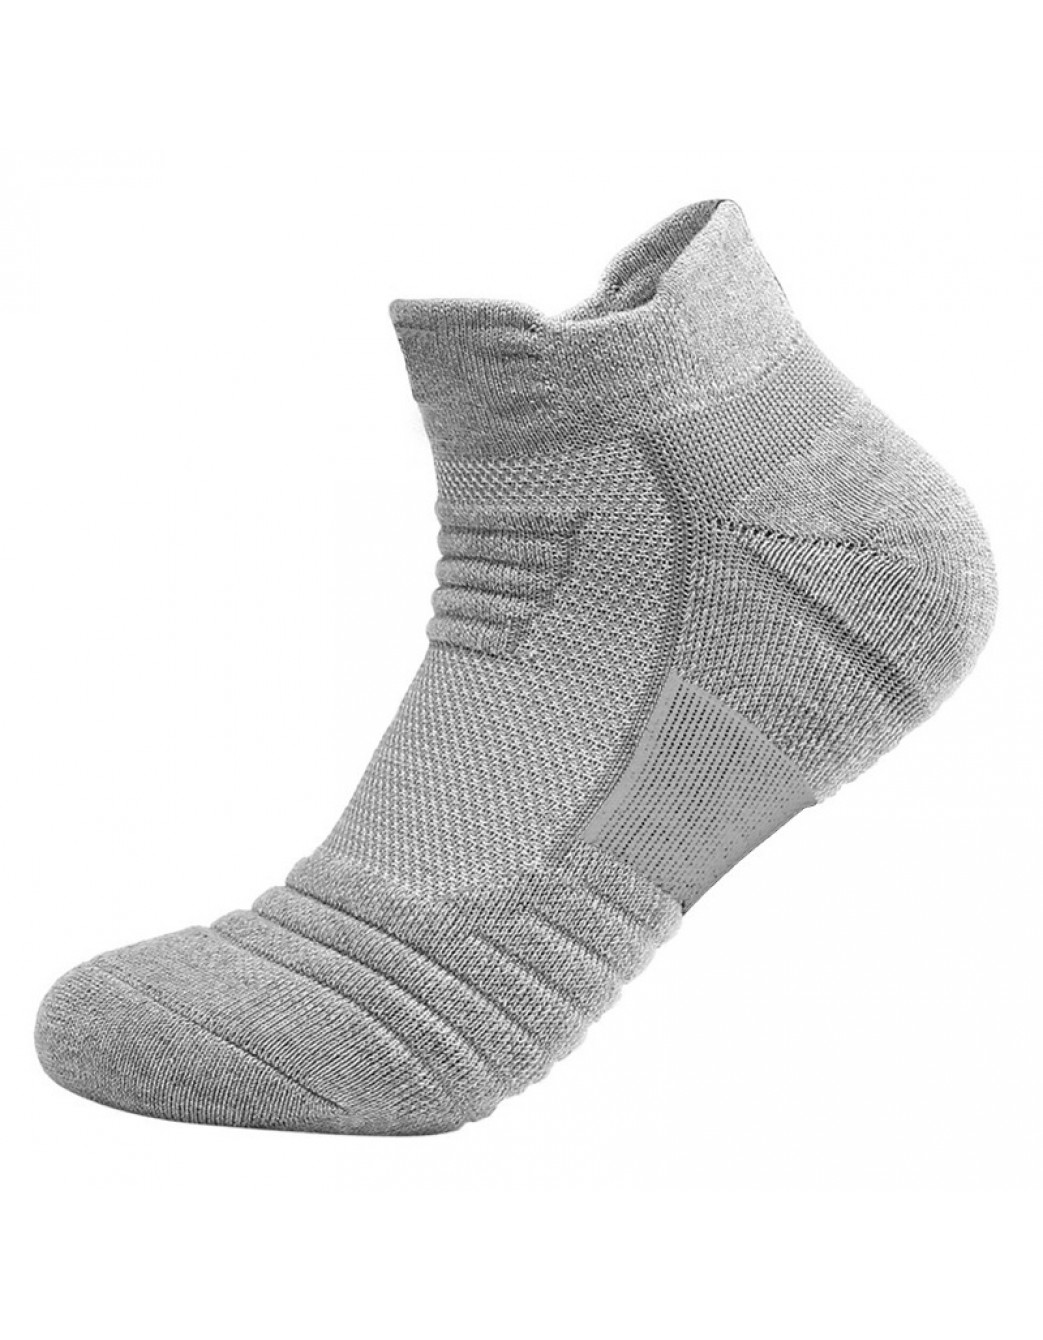 Mens Outdoor Sports Cotton Socks